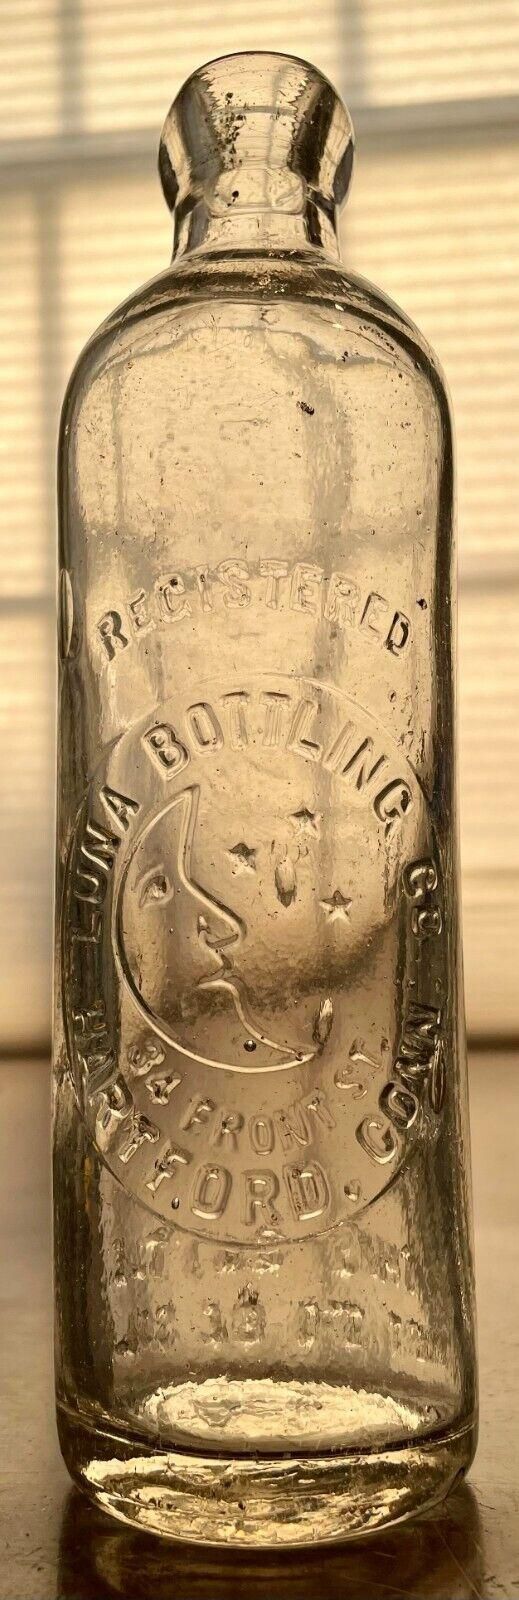 Luna Bottling Company Hutch Bottle